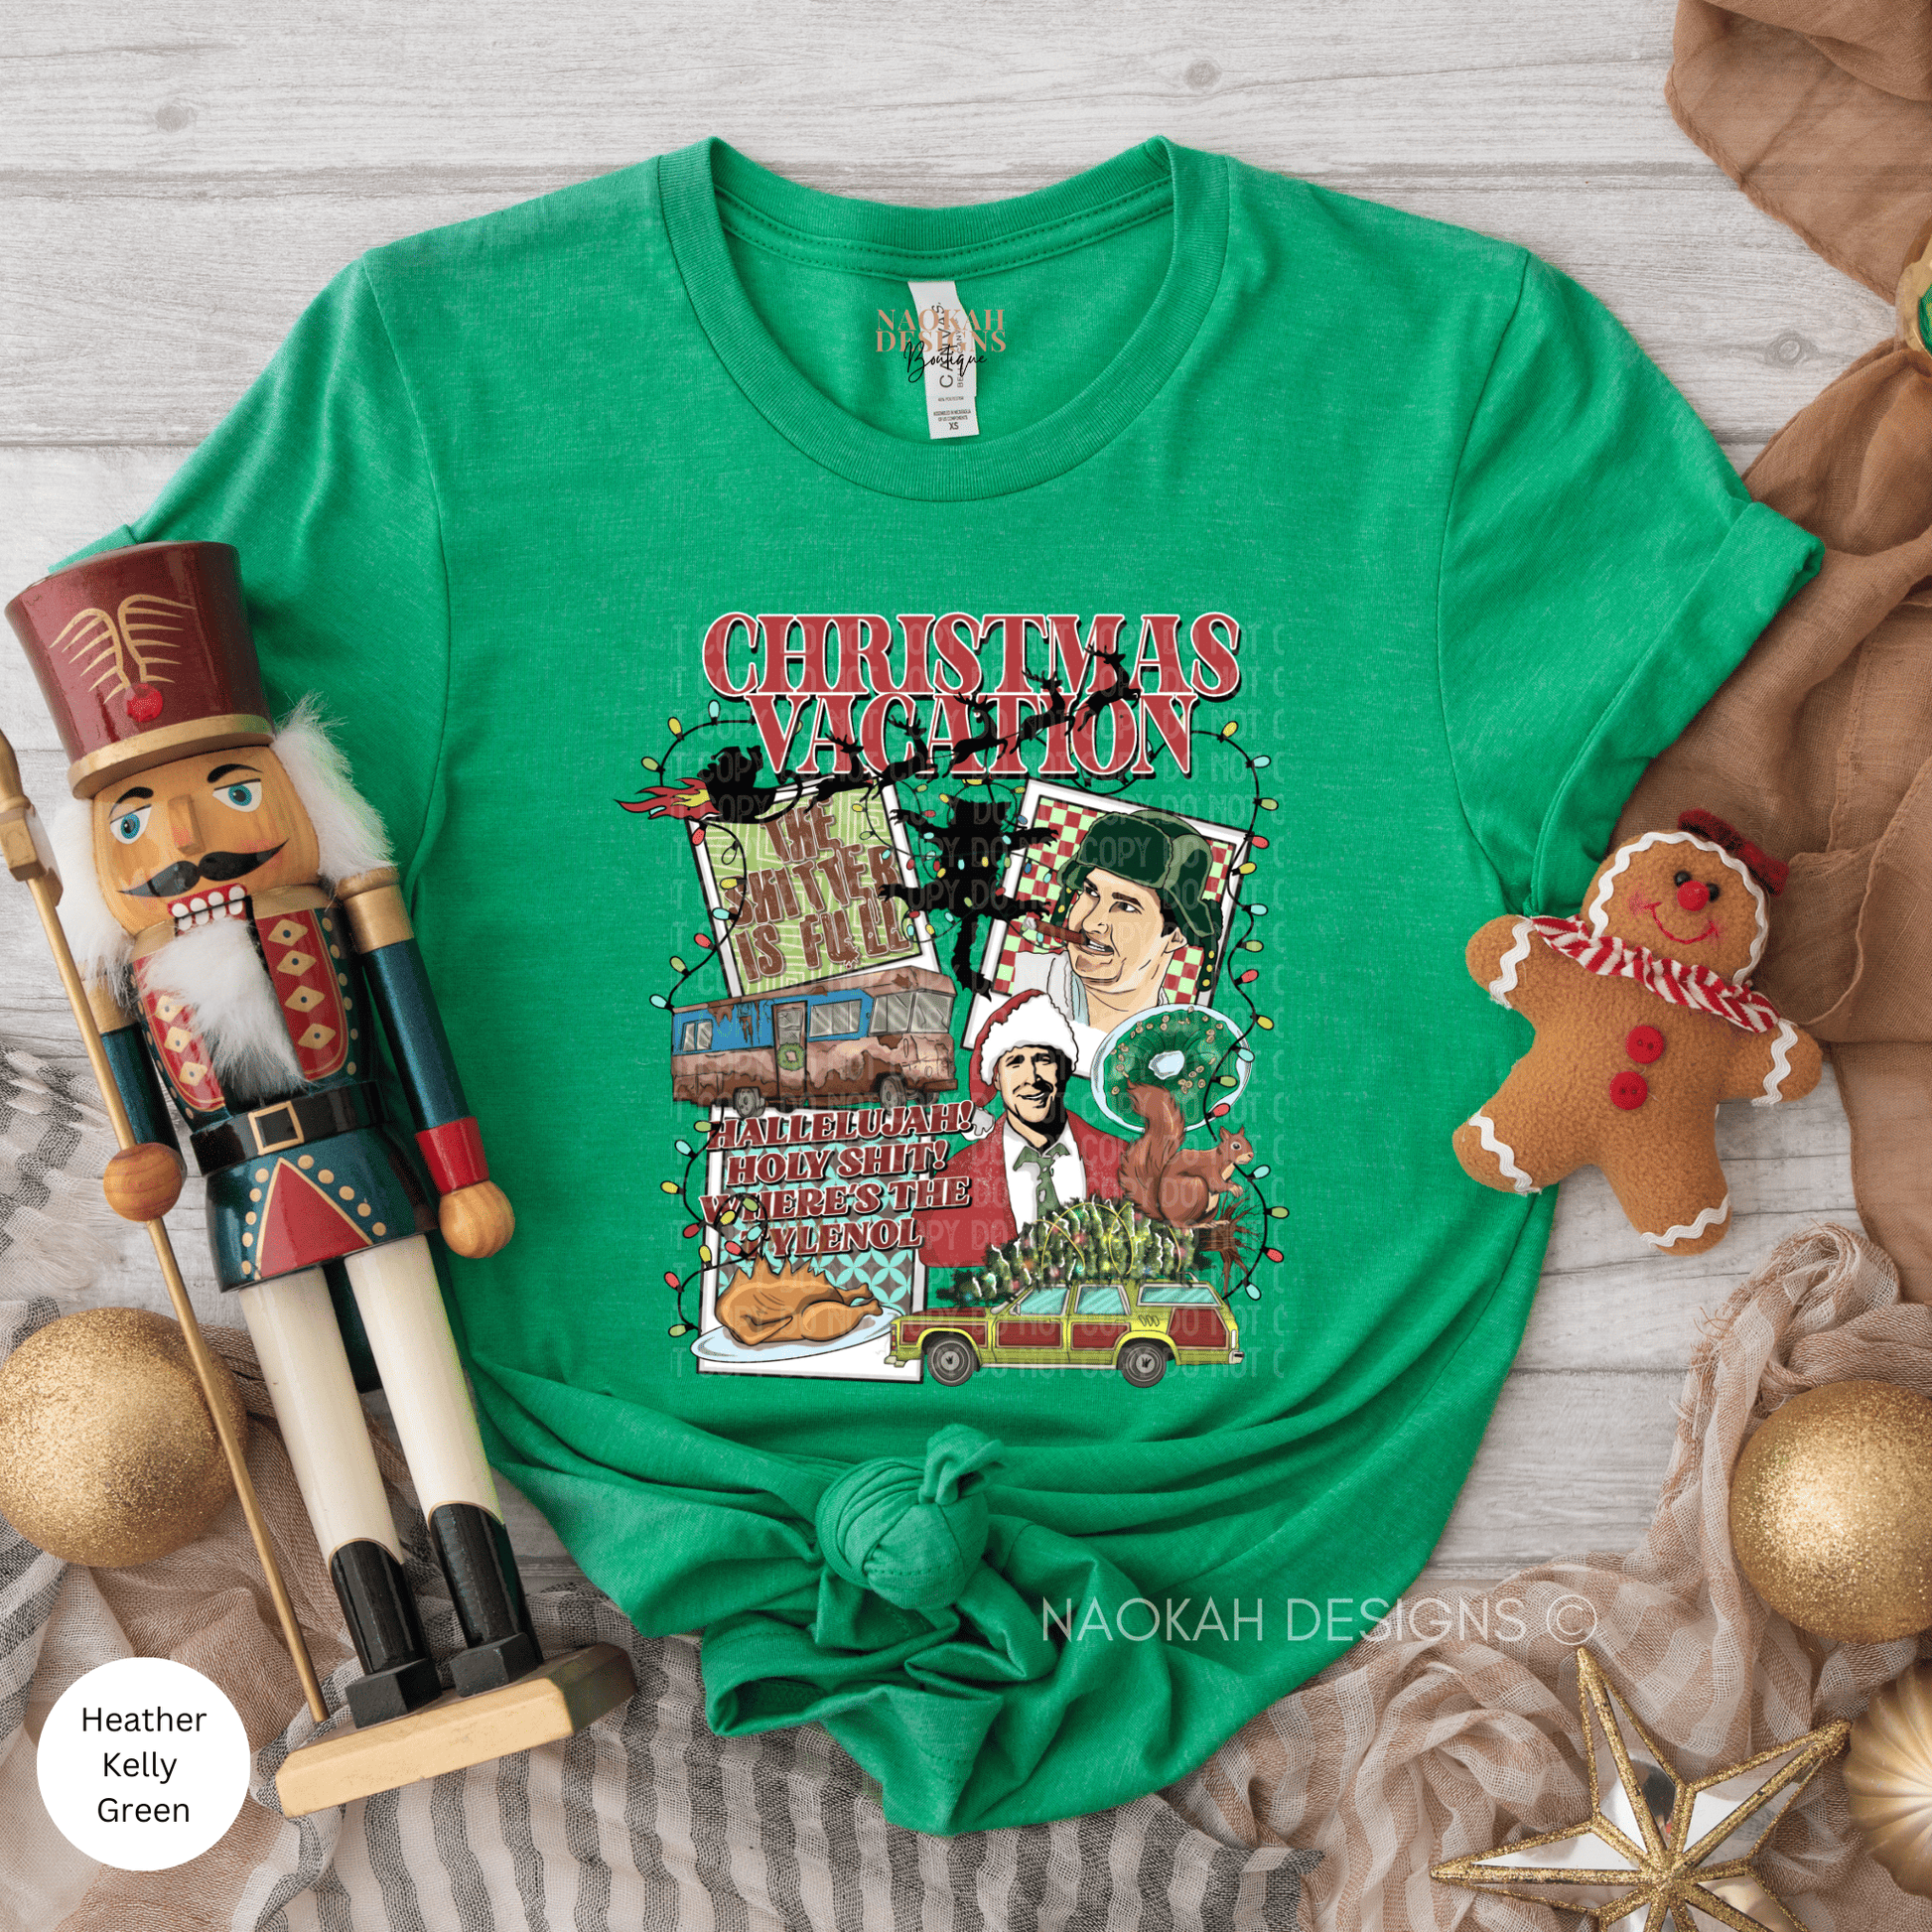 Christmas Vacation Shirt, A Real Beaut Guaranteed Shirt, Little Full Lotta Sap Shirt, Cousin Eddy, Griswold Shirt, Shitters Full, Lights, Illumination, Turkey 